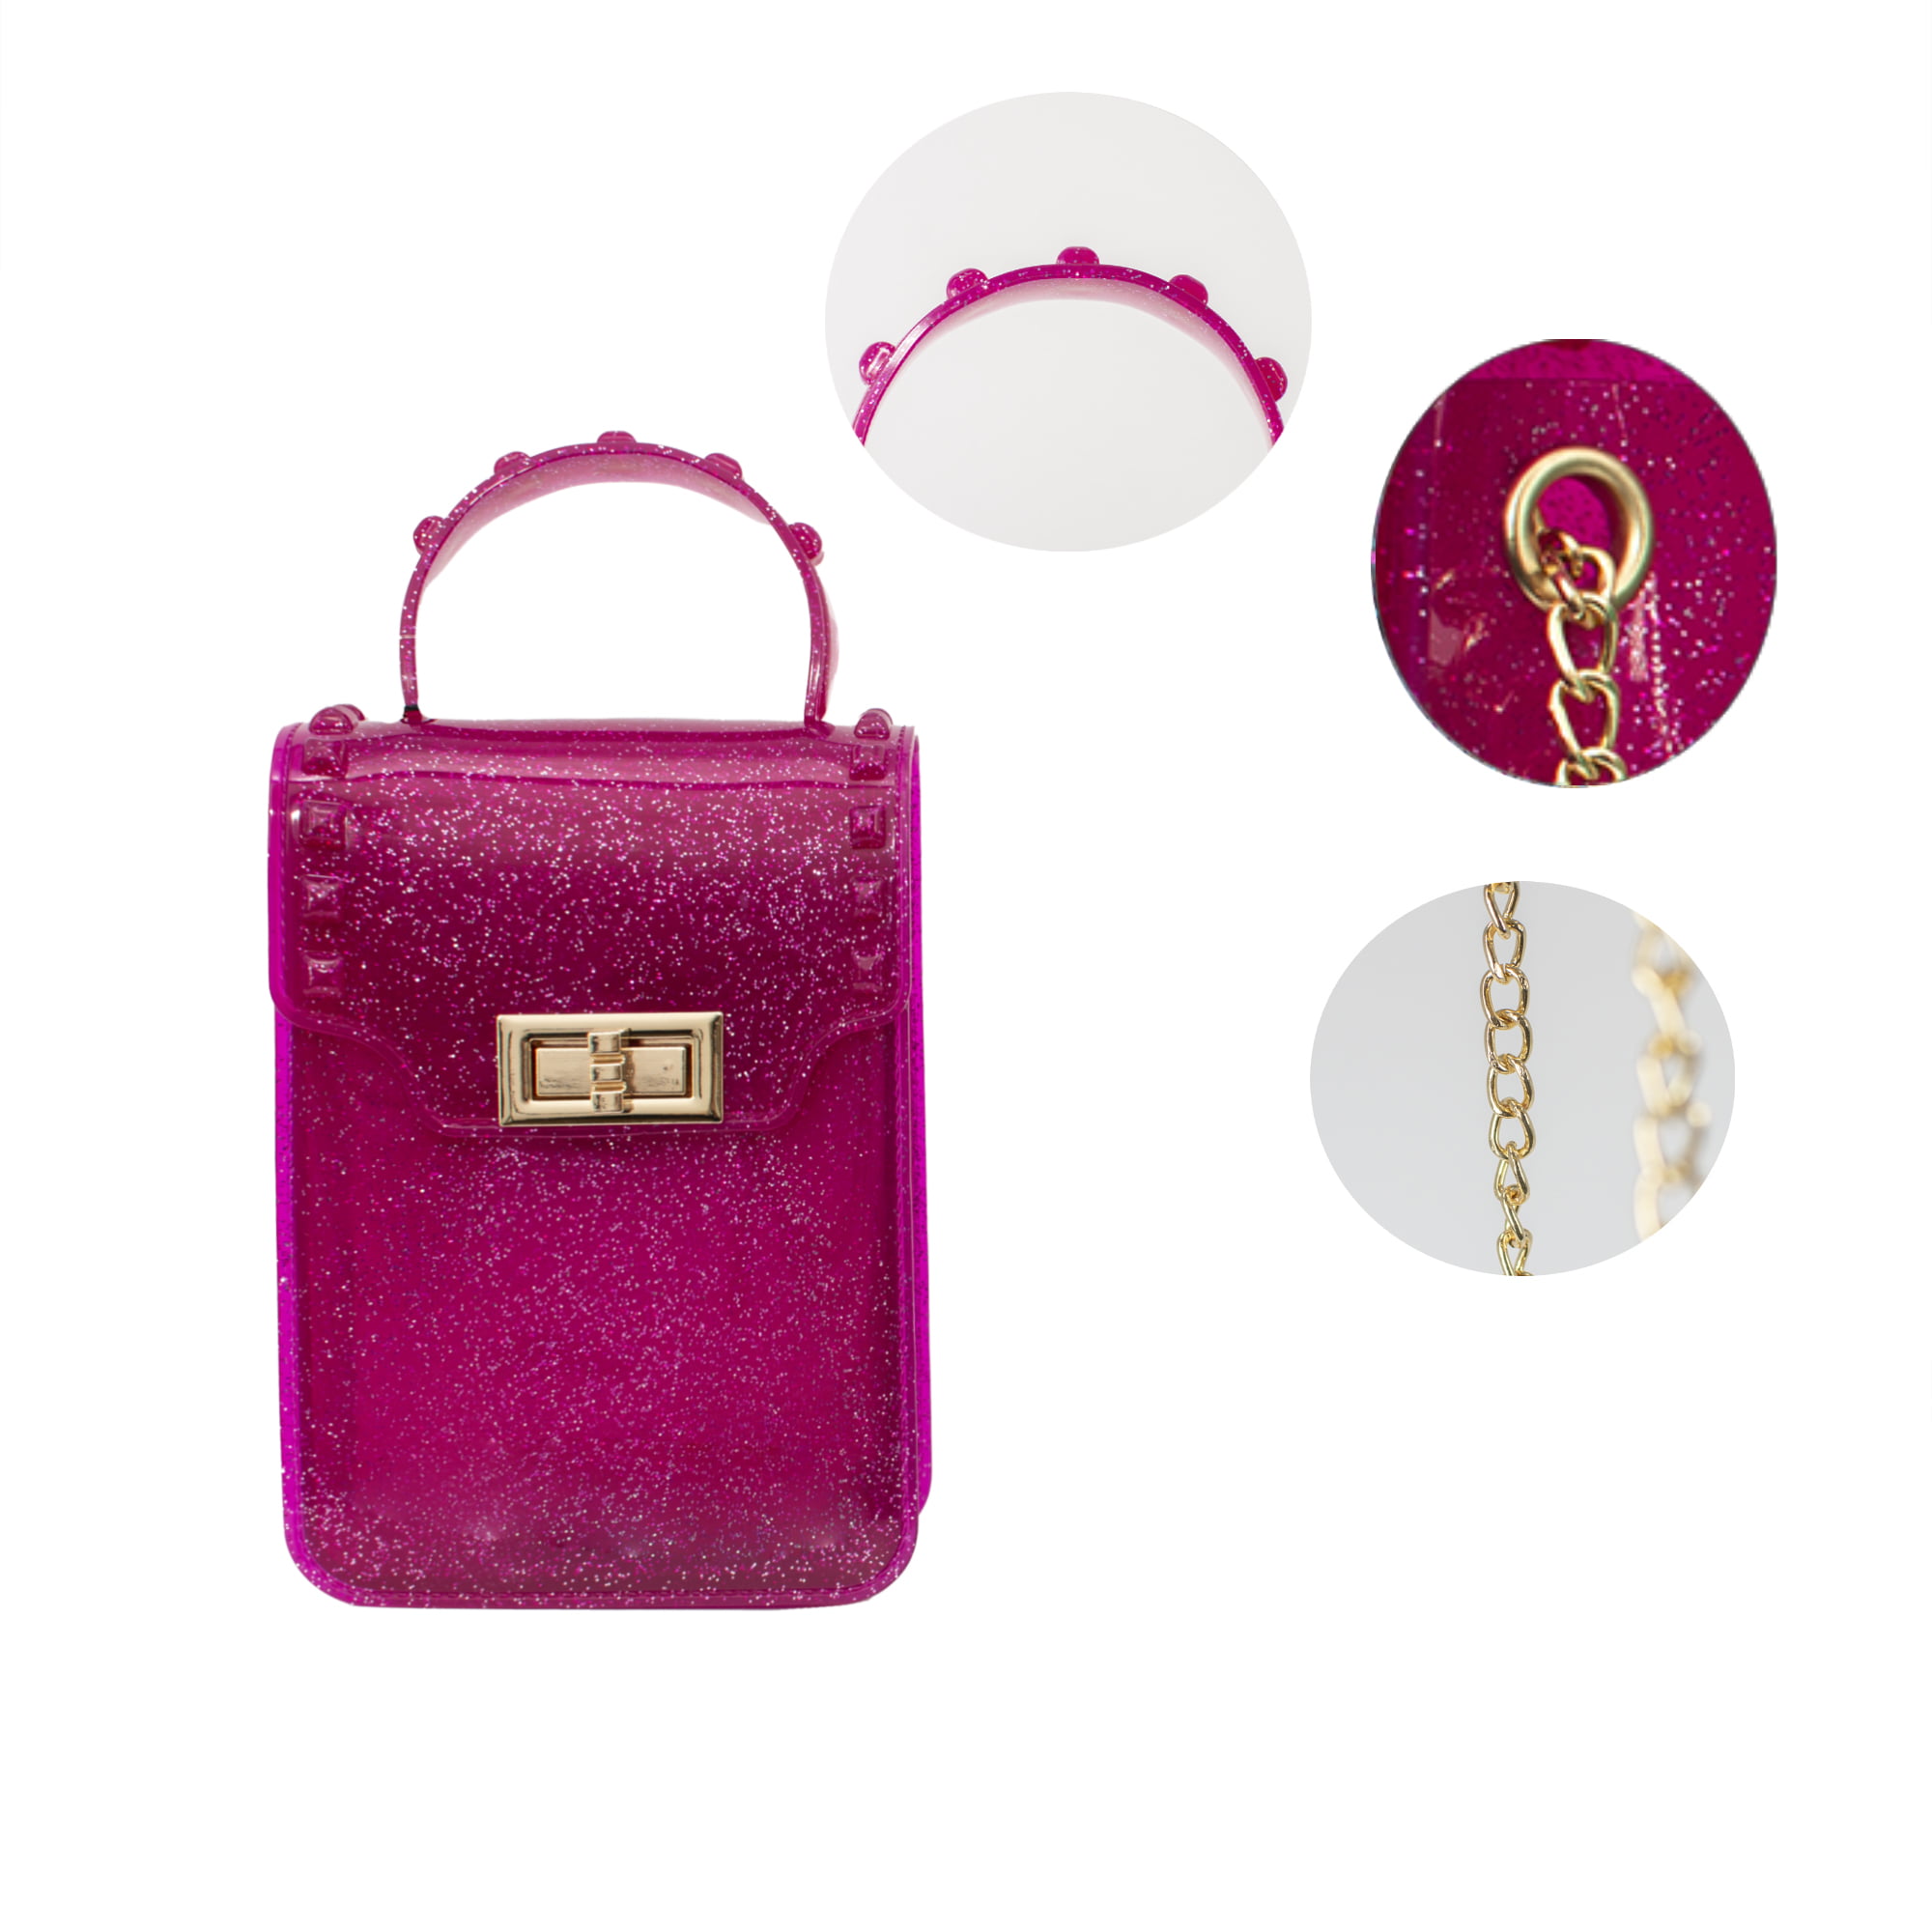 MOETYANG Semi Clear Purse for women,Pink Jelly Purse, Cute Crossbody  Shoulder Bag Clutch Fashion Design